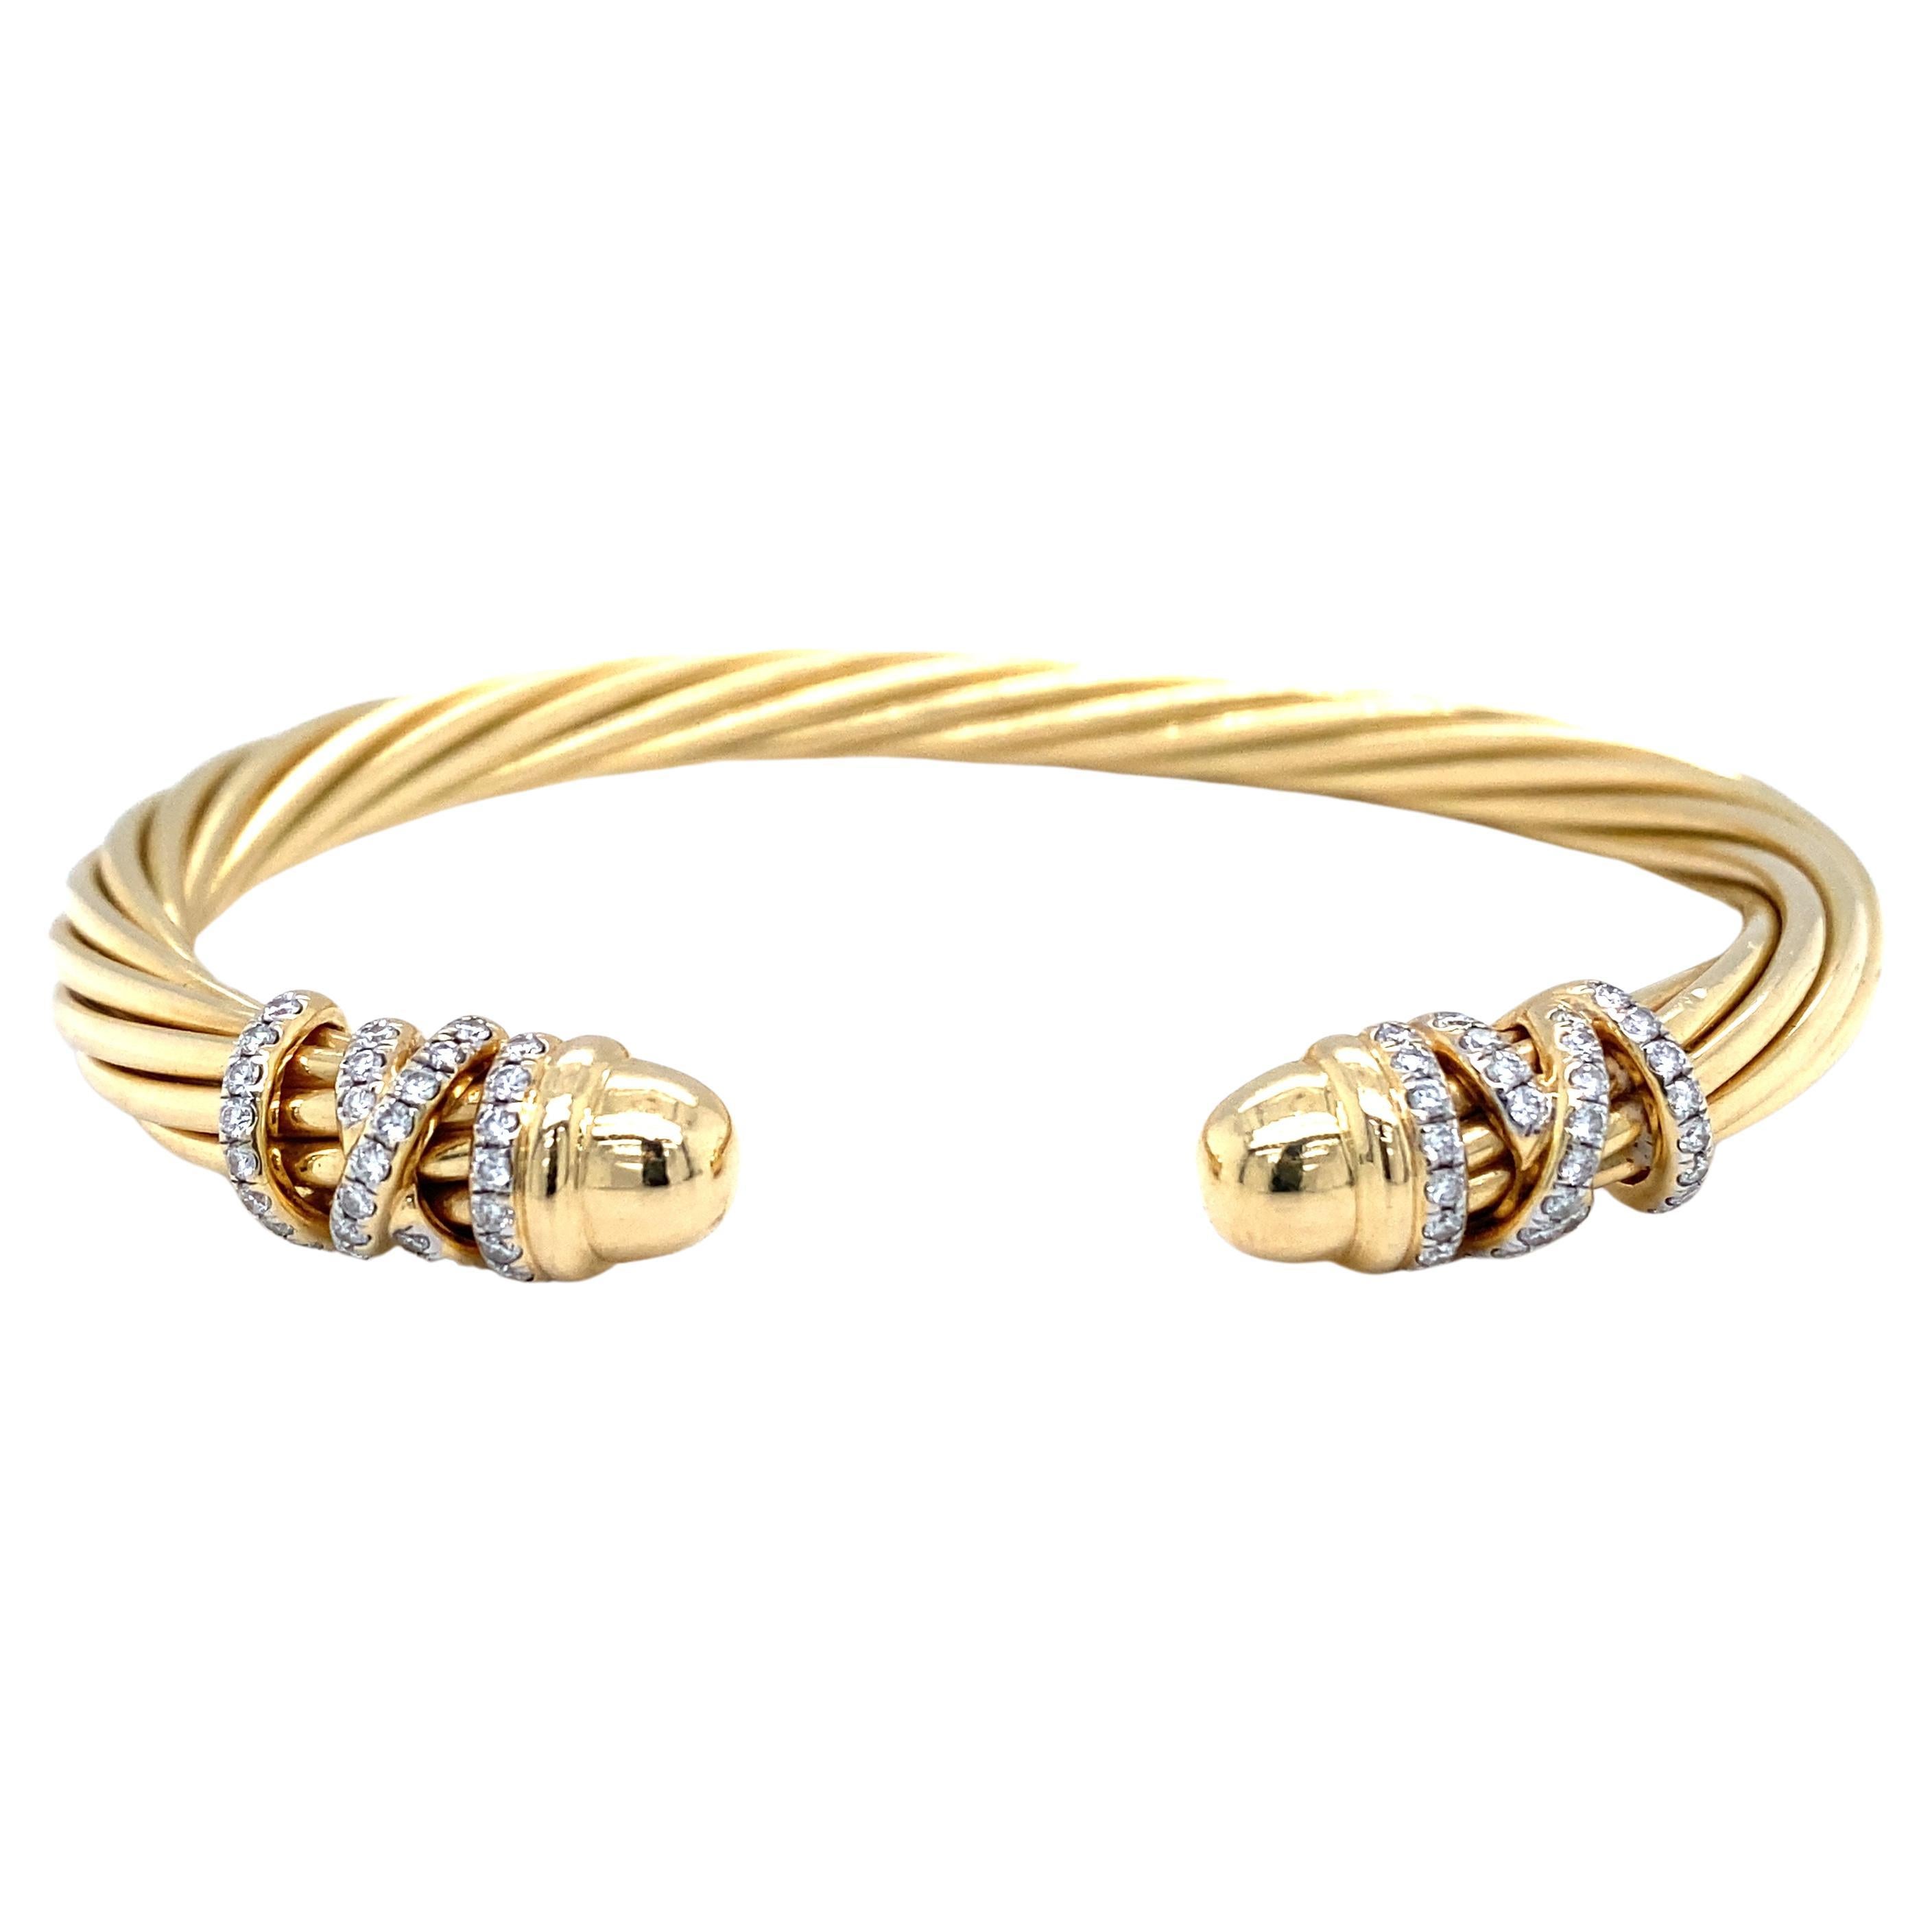 David Yurman Helena Diamond Cuff Bracelet in 18 Karat Yellow Gold